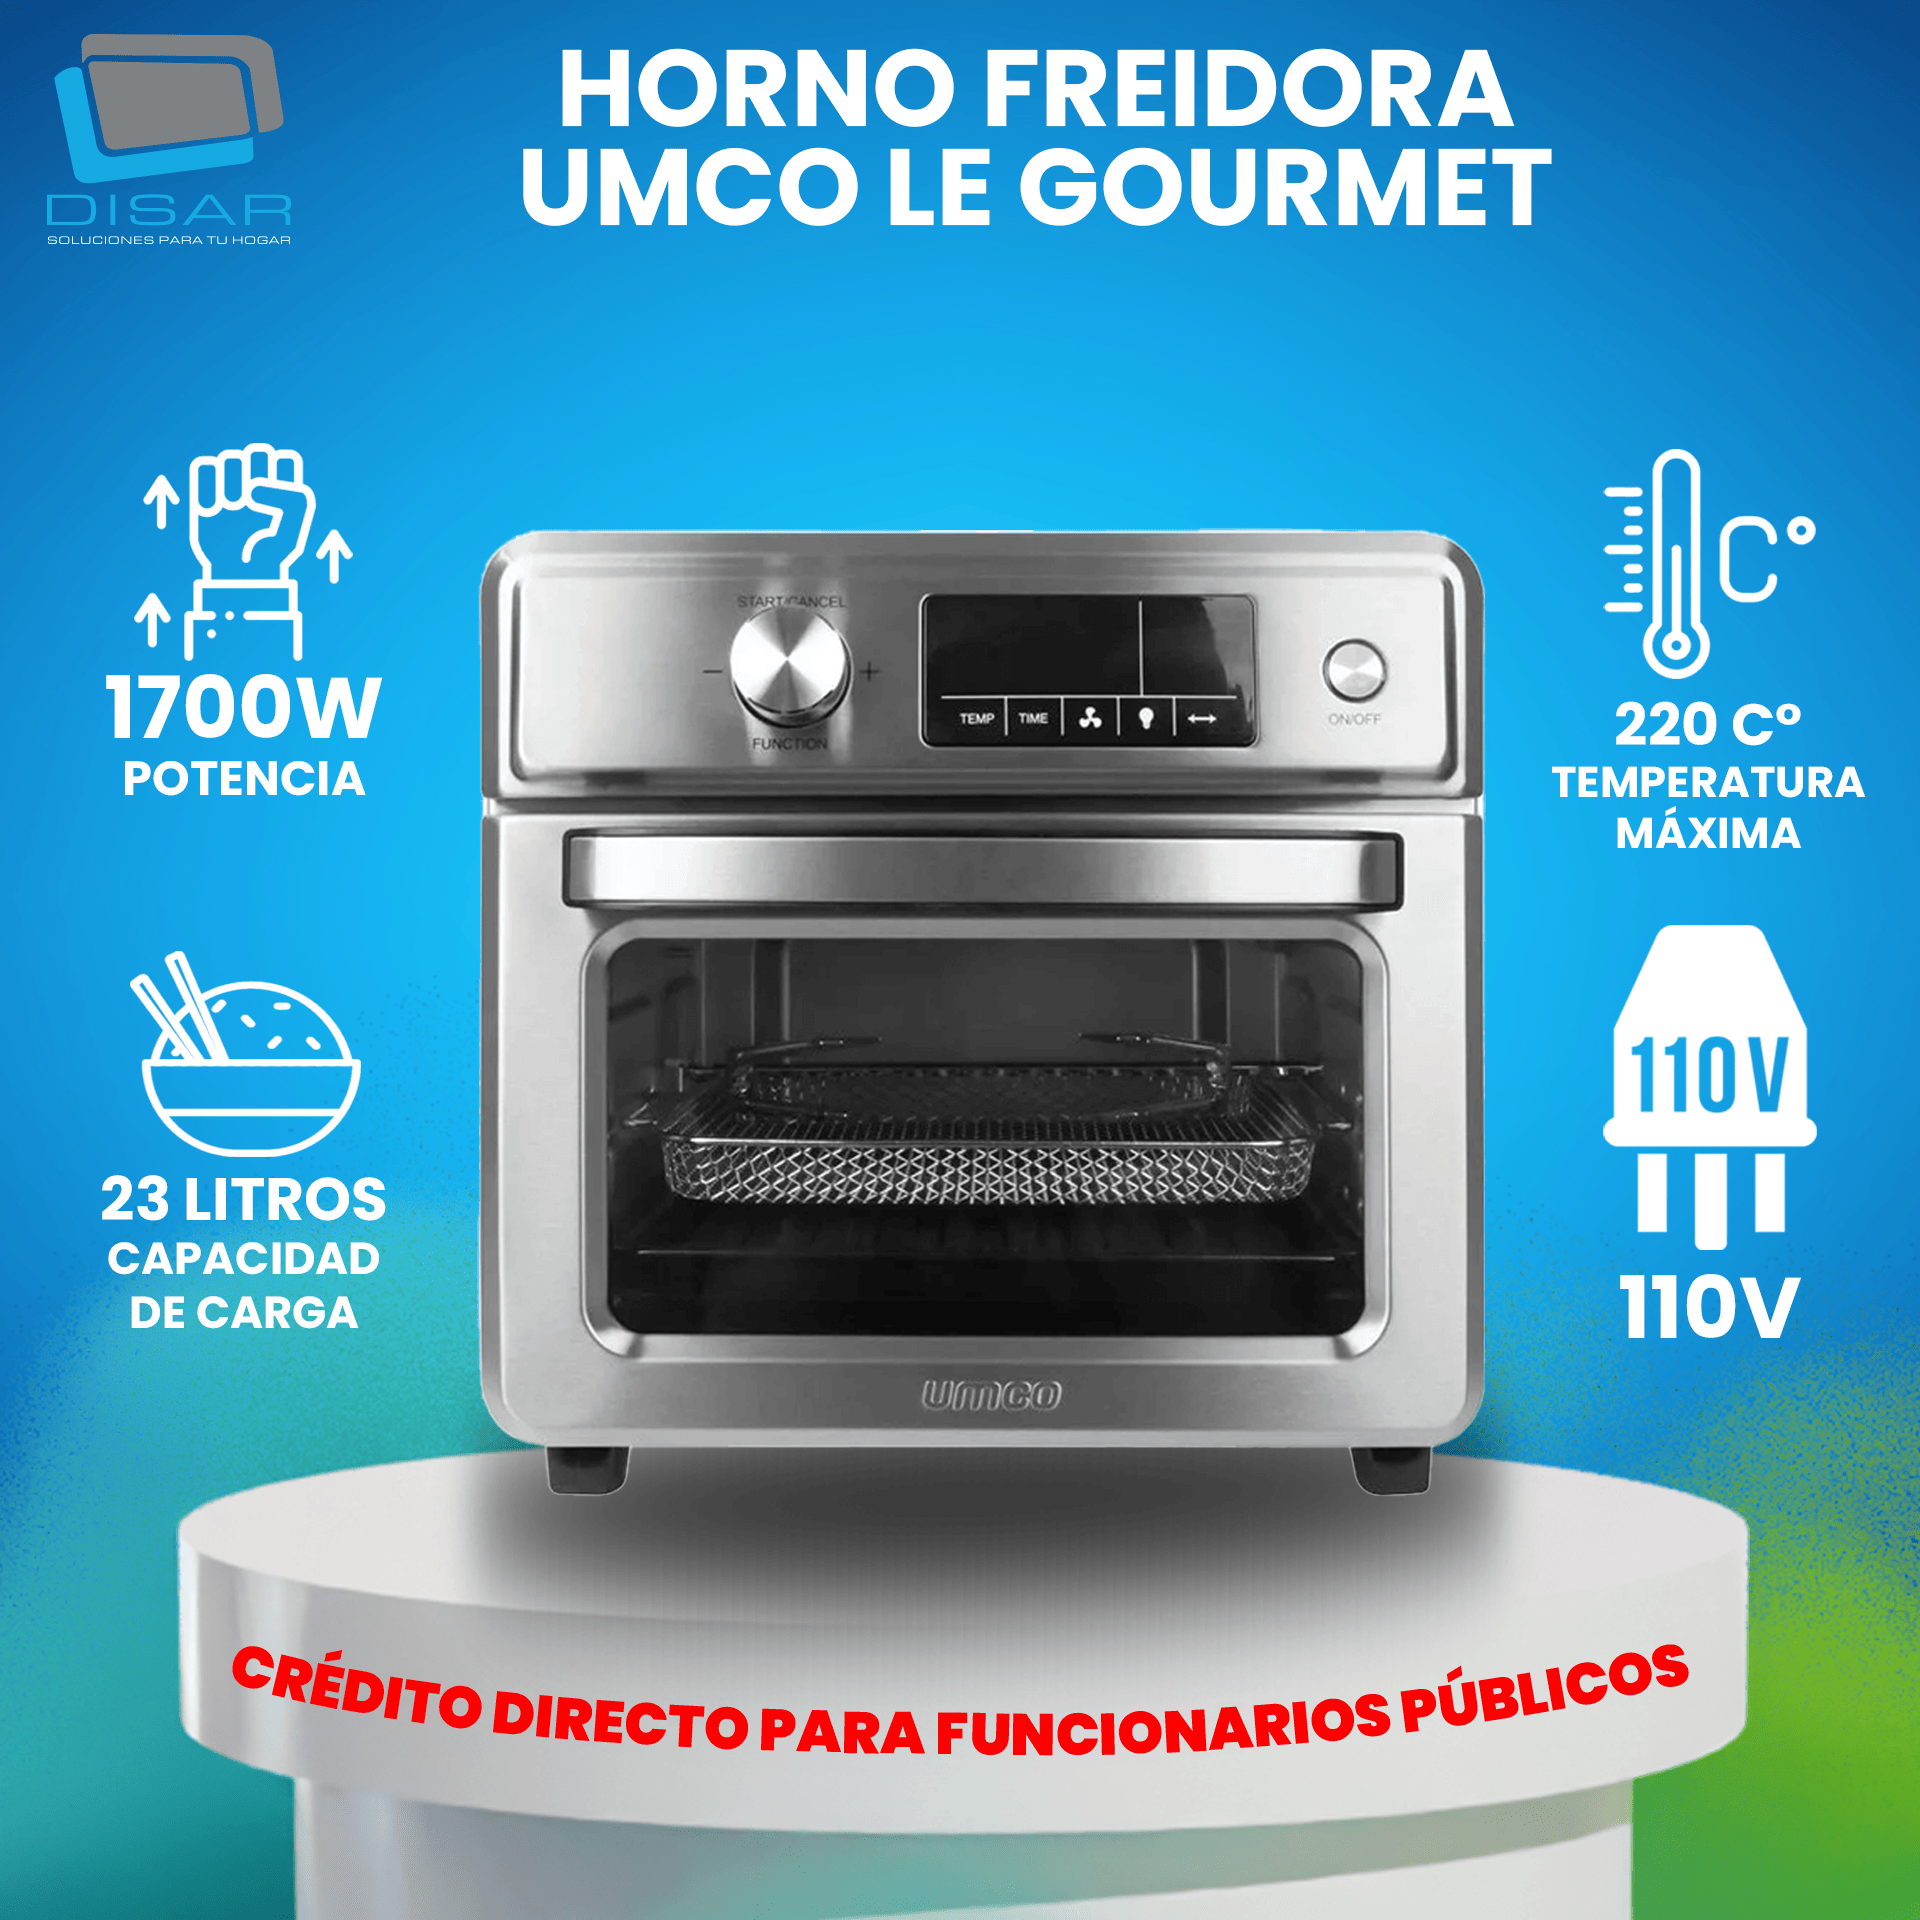 HORNO Y FREIDORA DE AIRE INNOVA HORNO-AIRFRYER 34 LT 1600W